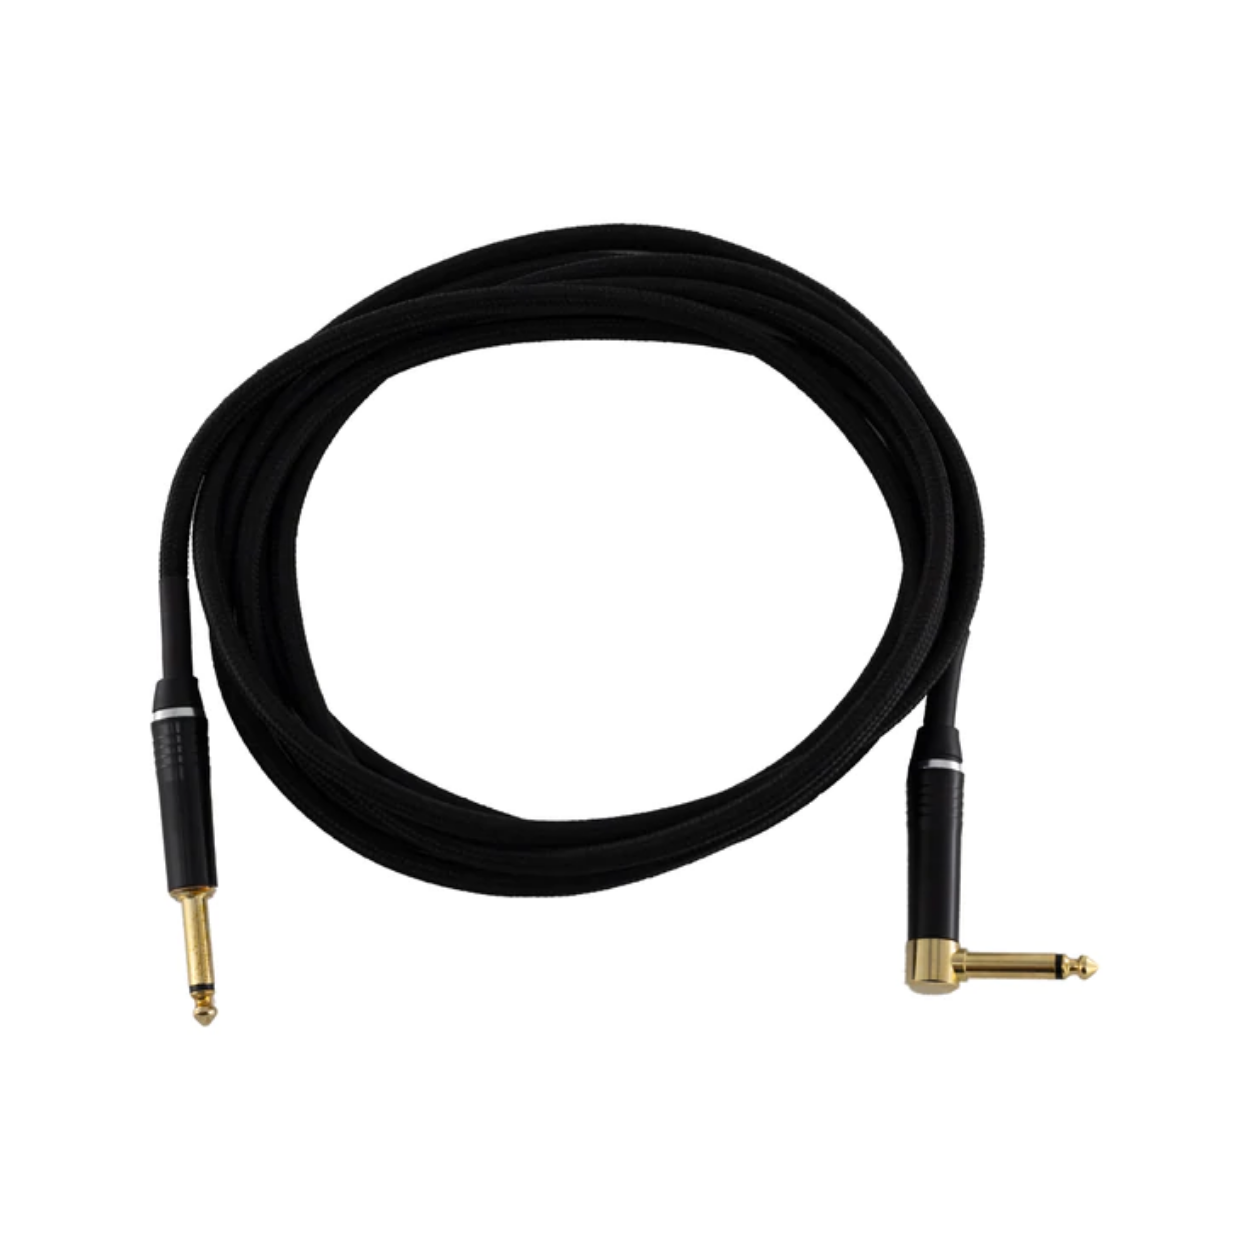 koda plus KIC10TW Straight-Angled Instrument Cable, 10ft, Black Tweed